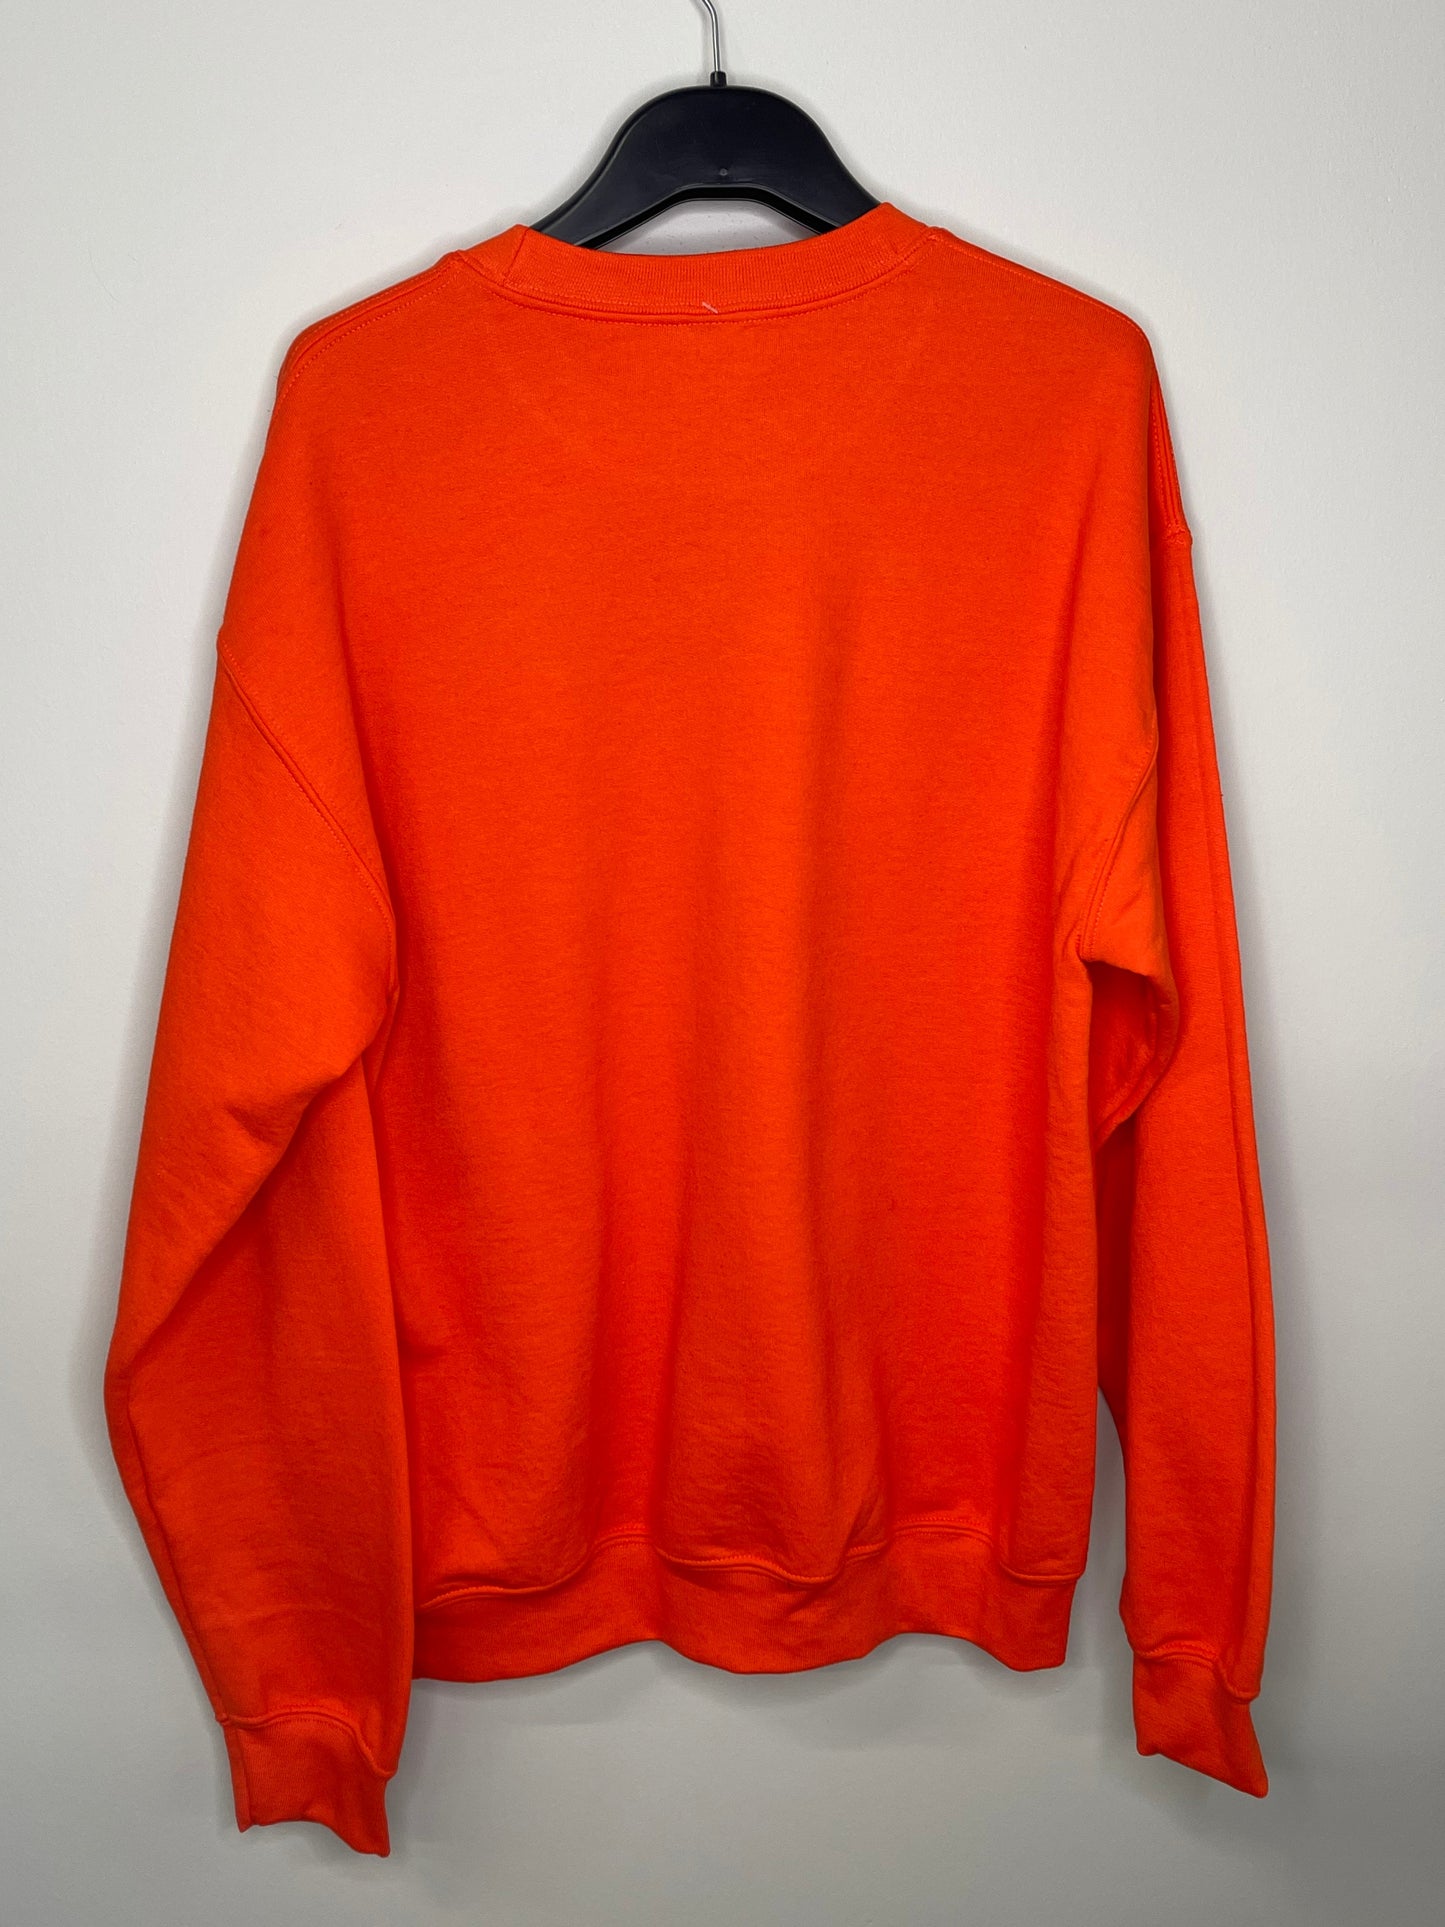 Sweatshirt, Crewneck Orange, Shoulder Walking Tiger